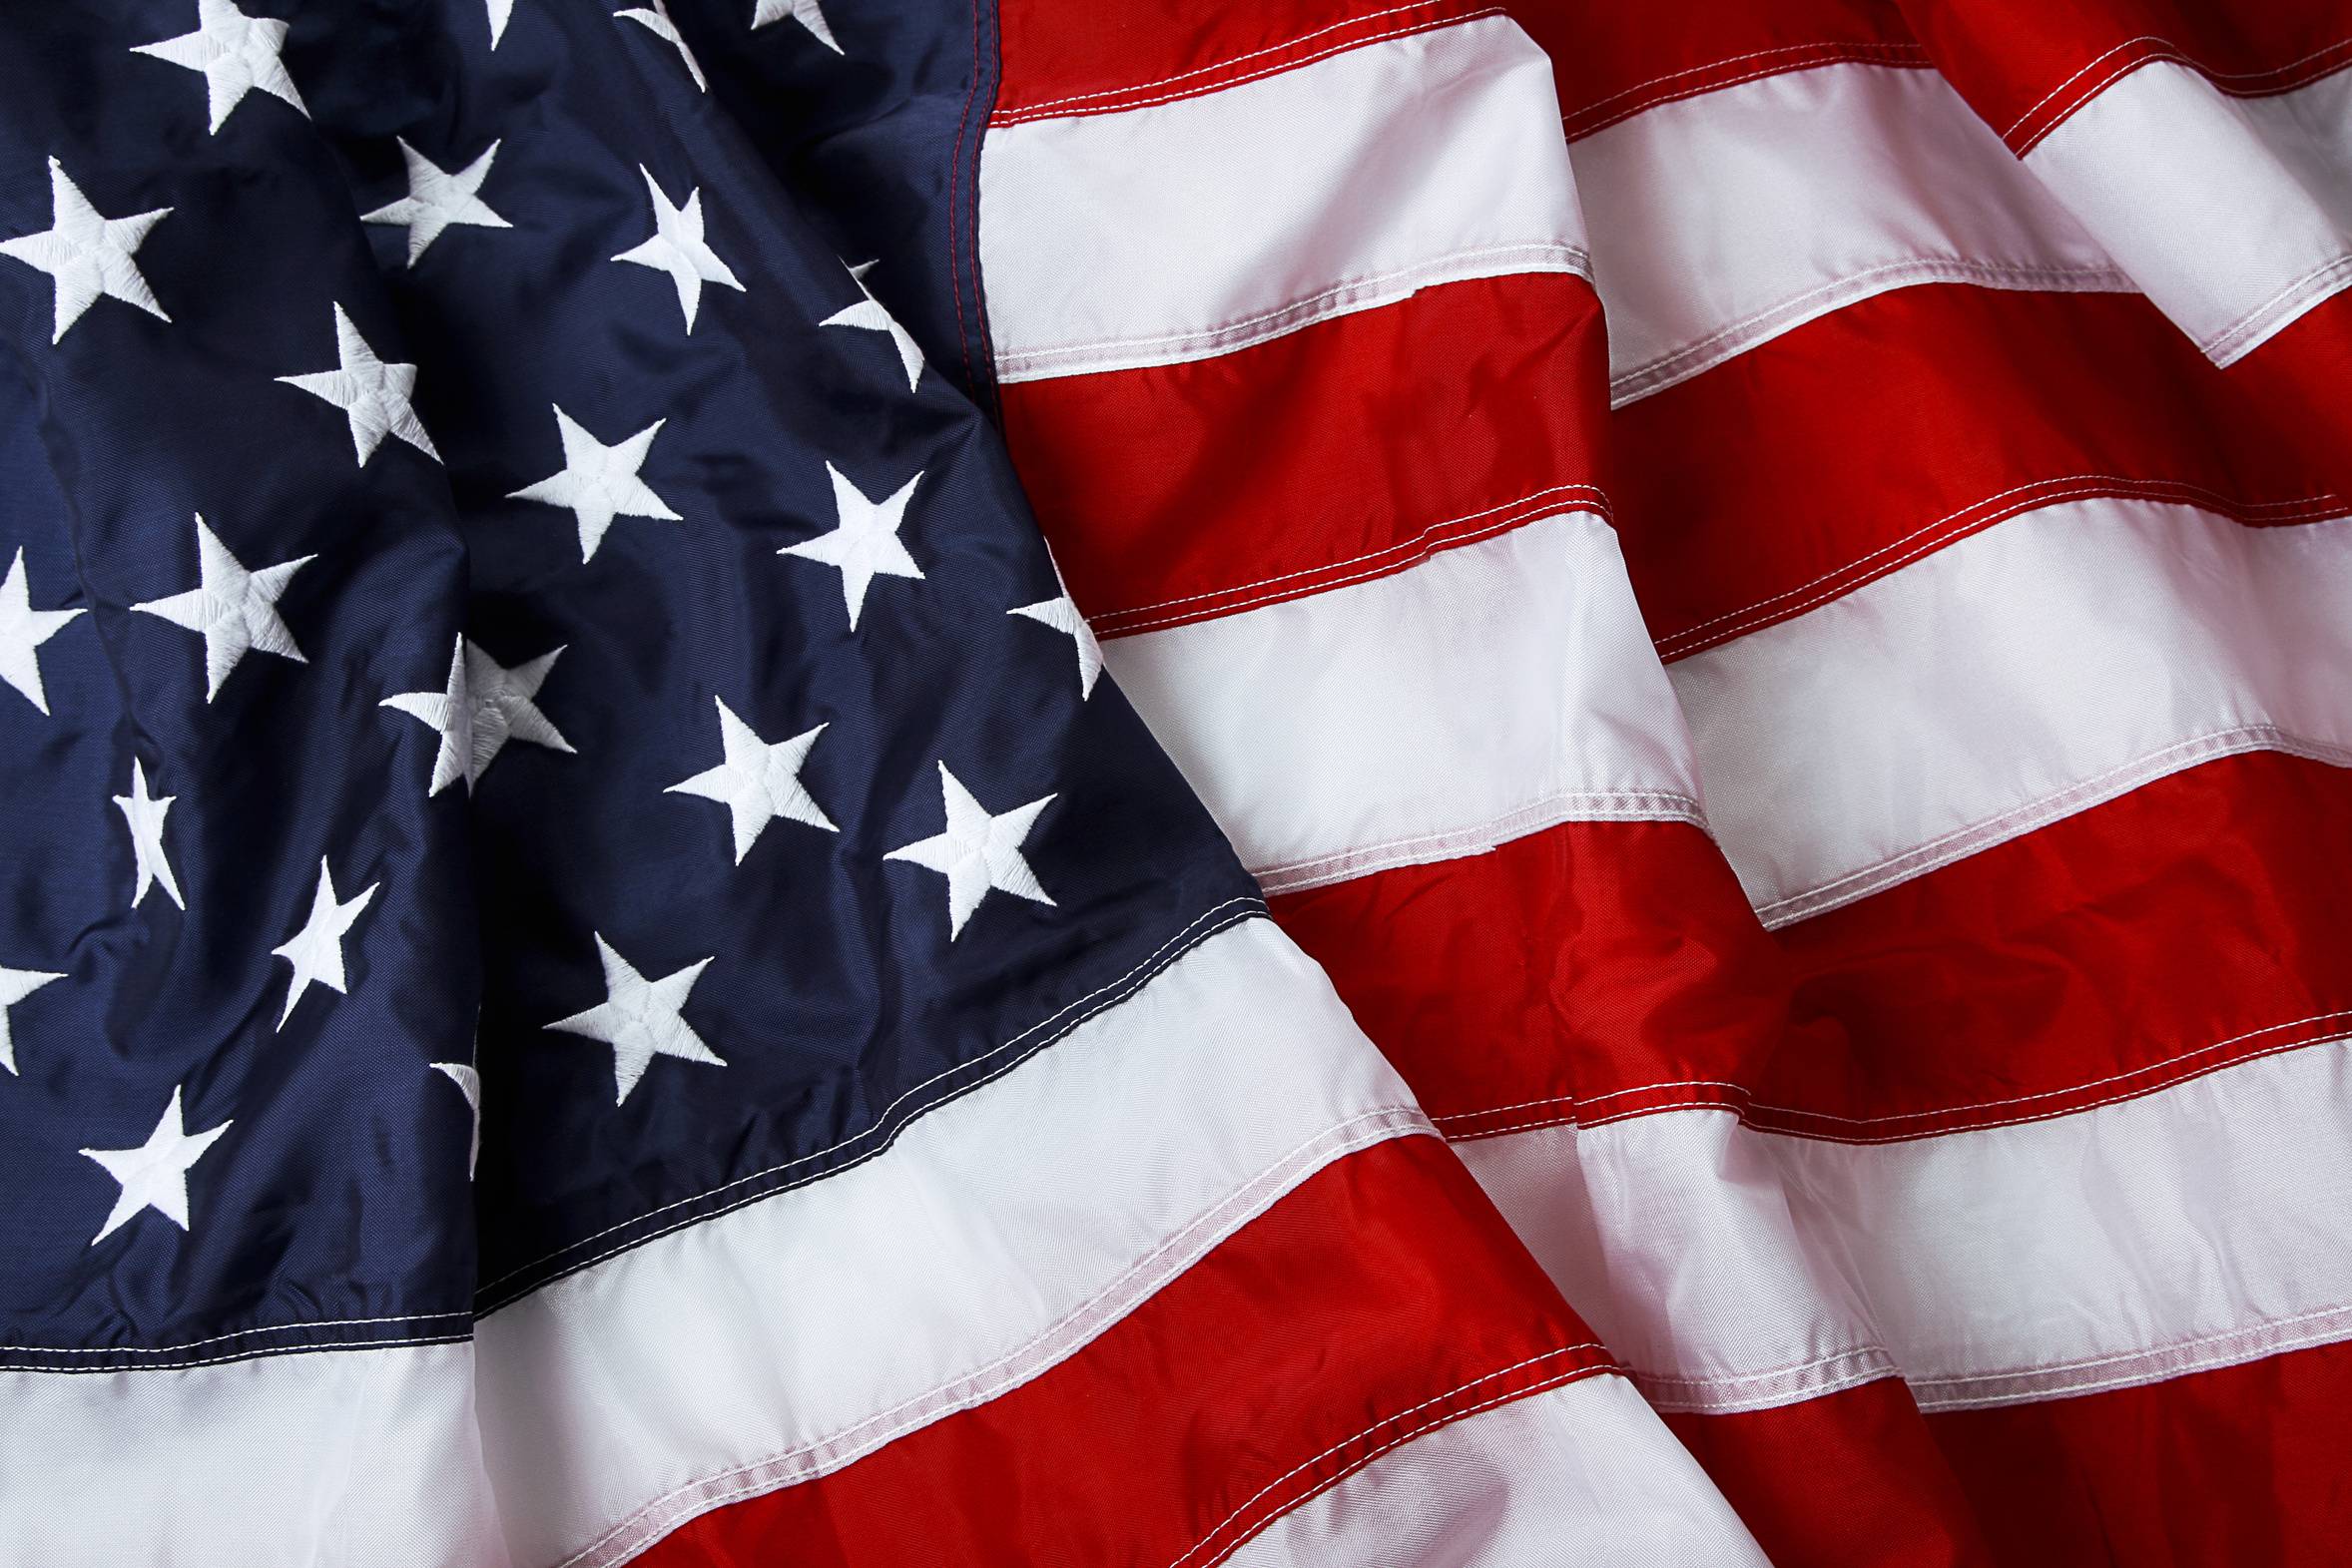 The Pledge of Allegiance is Unpatriotic. Turning Point USA